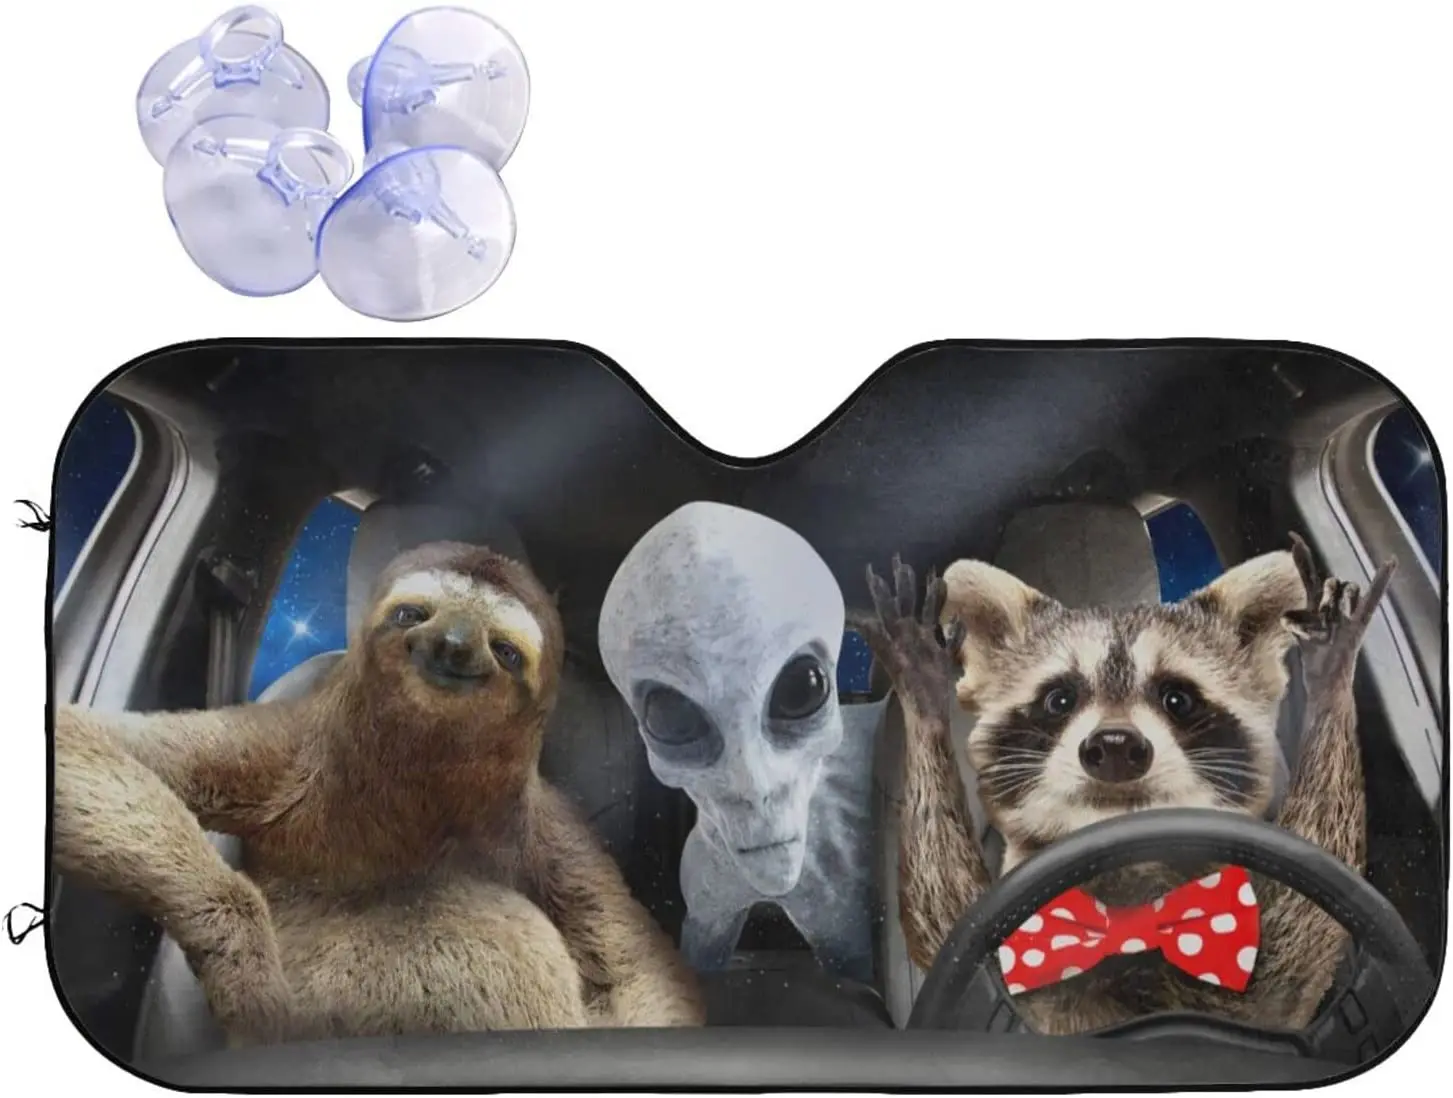 

Windshield Car Sunshade Funny Animal Skull Sun Shade Sloth Raccoon Window Covers for Cars Folding Block UV Rays Visor Shade